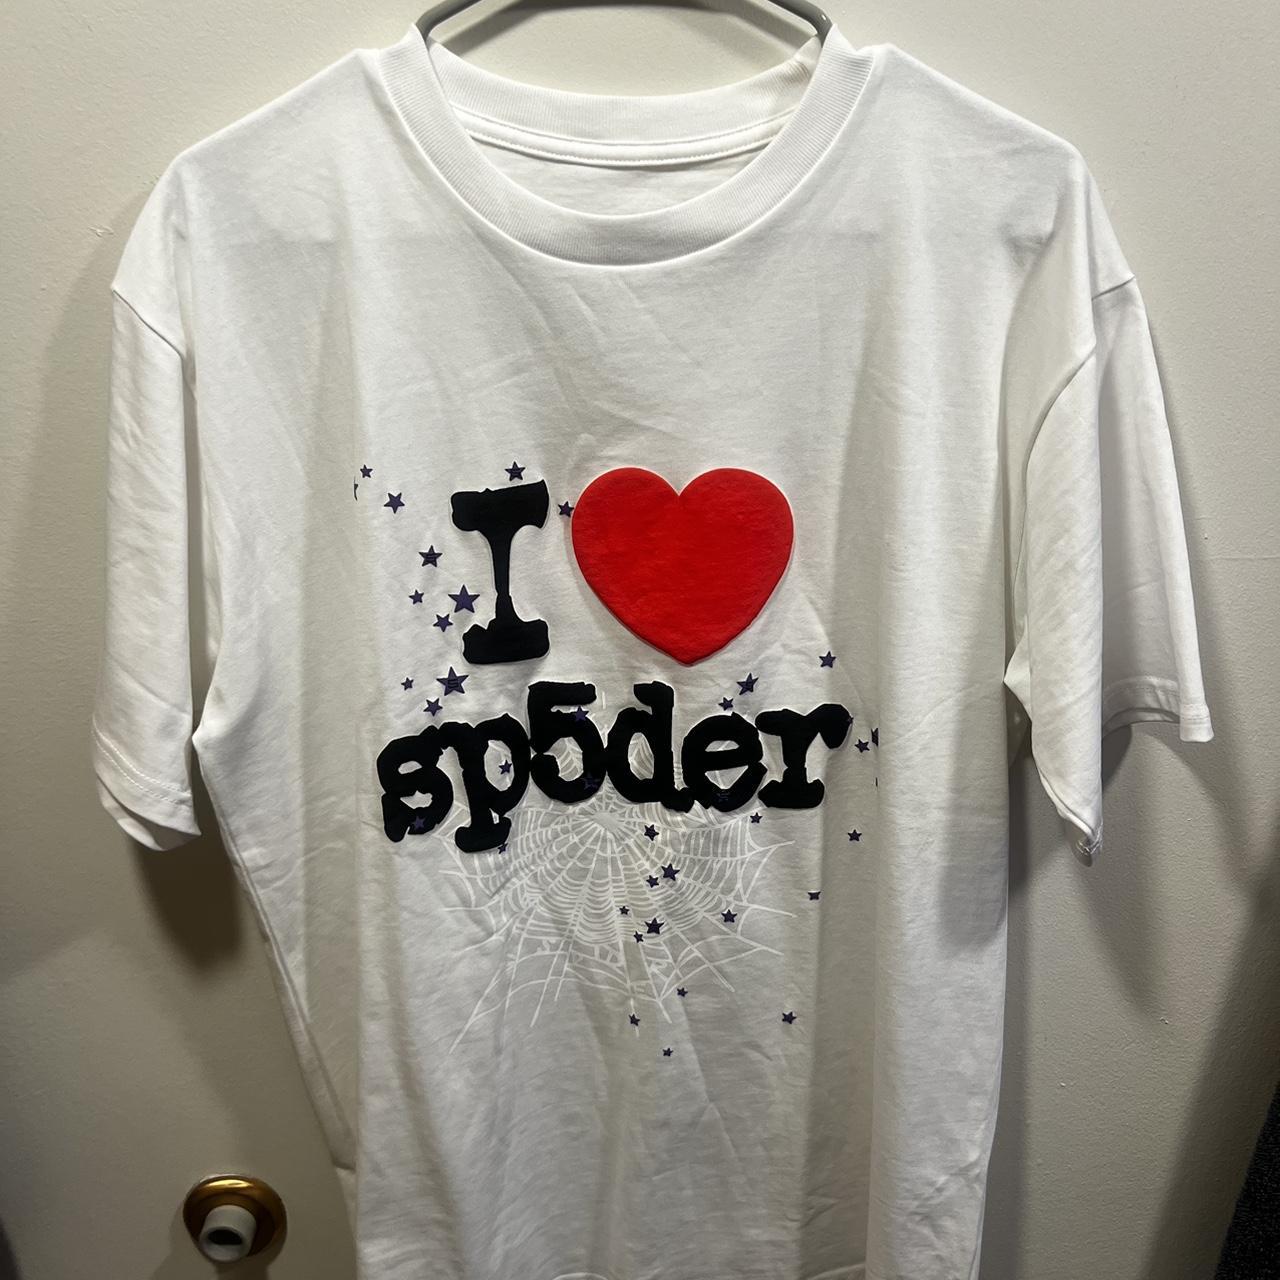 Spider shirt - Depop